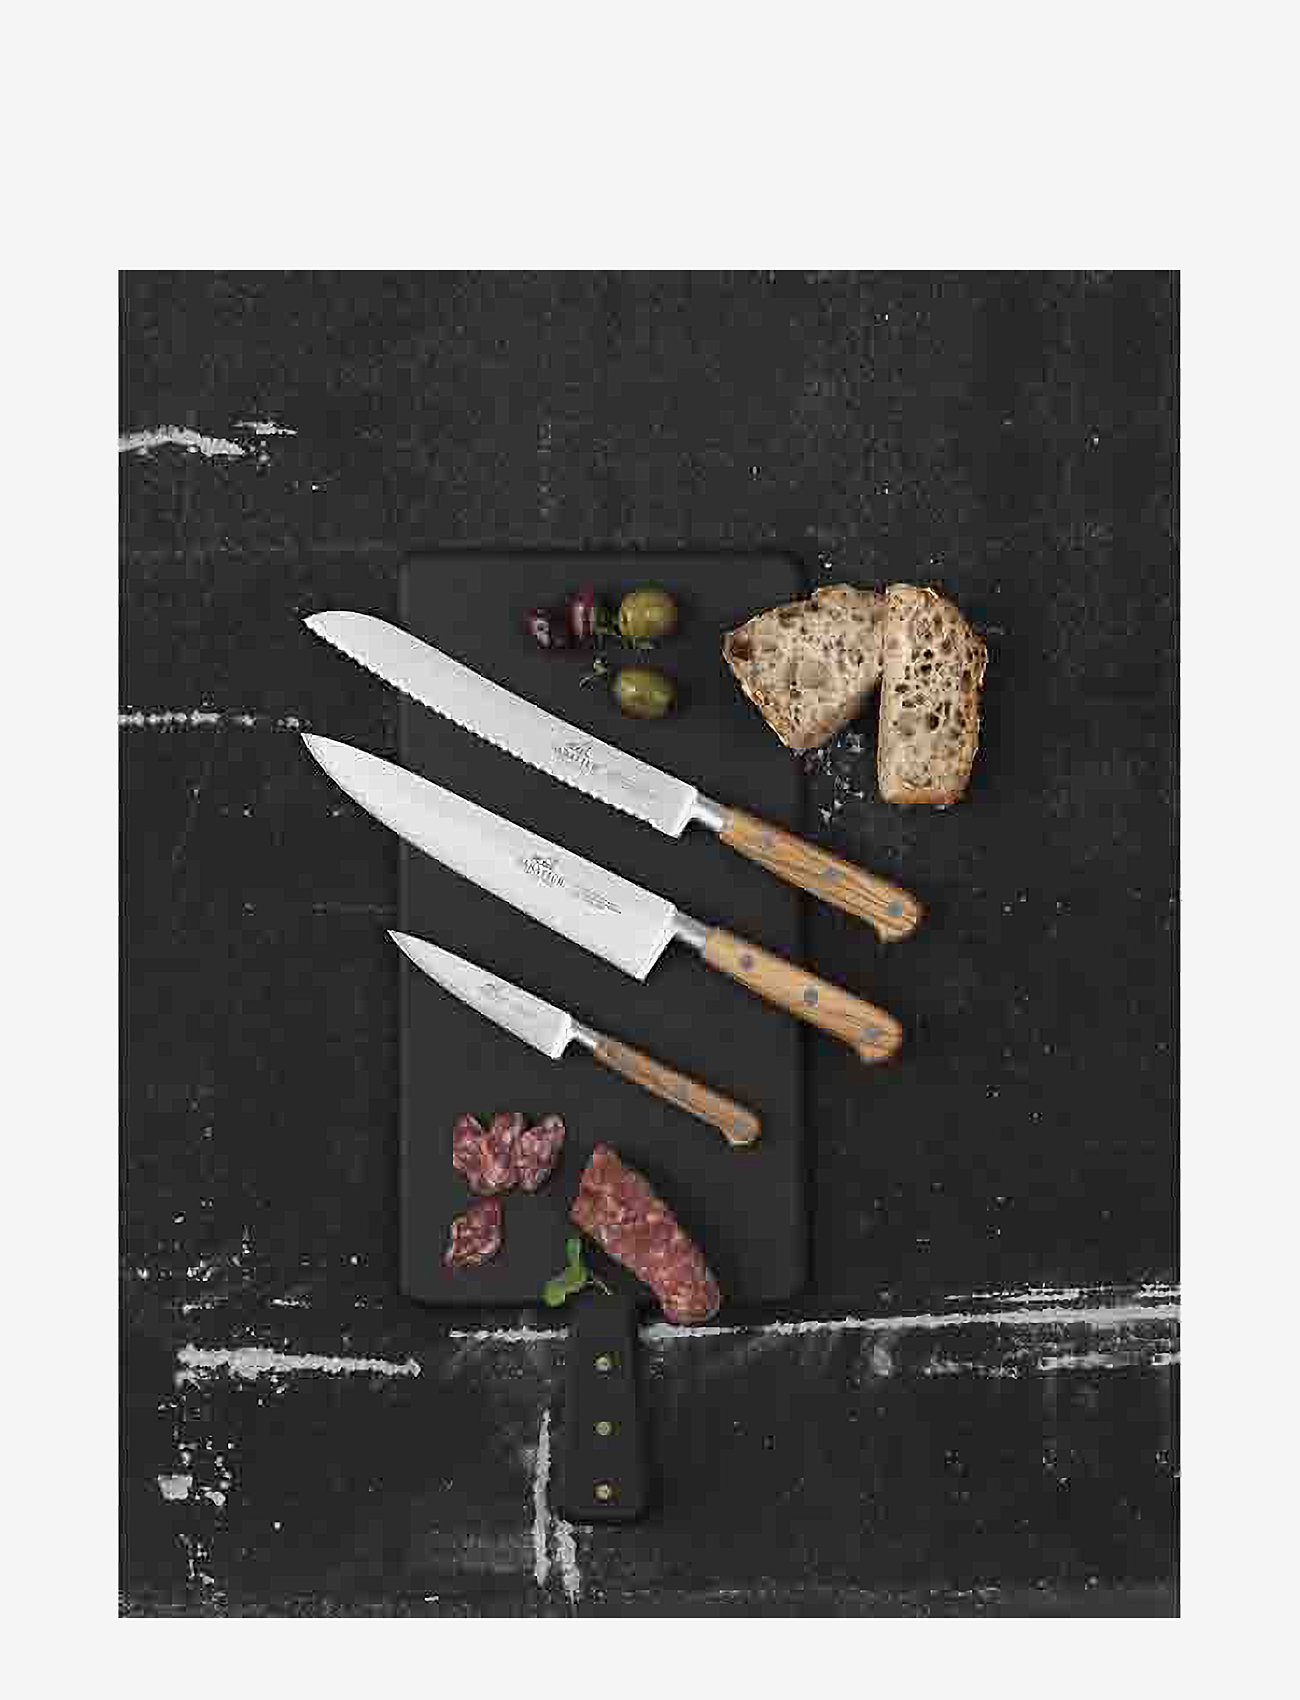 Lion Sabatier - Chef knife Ideal Provence 20cm - kochmesser - steel/wood - 1